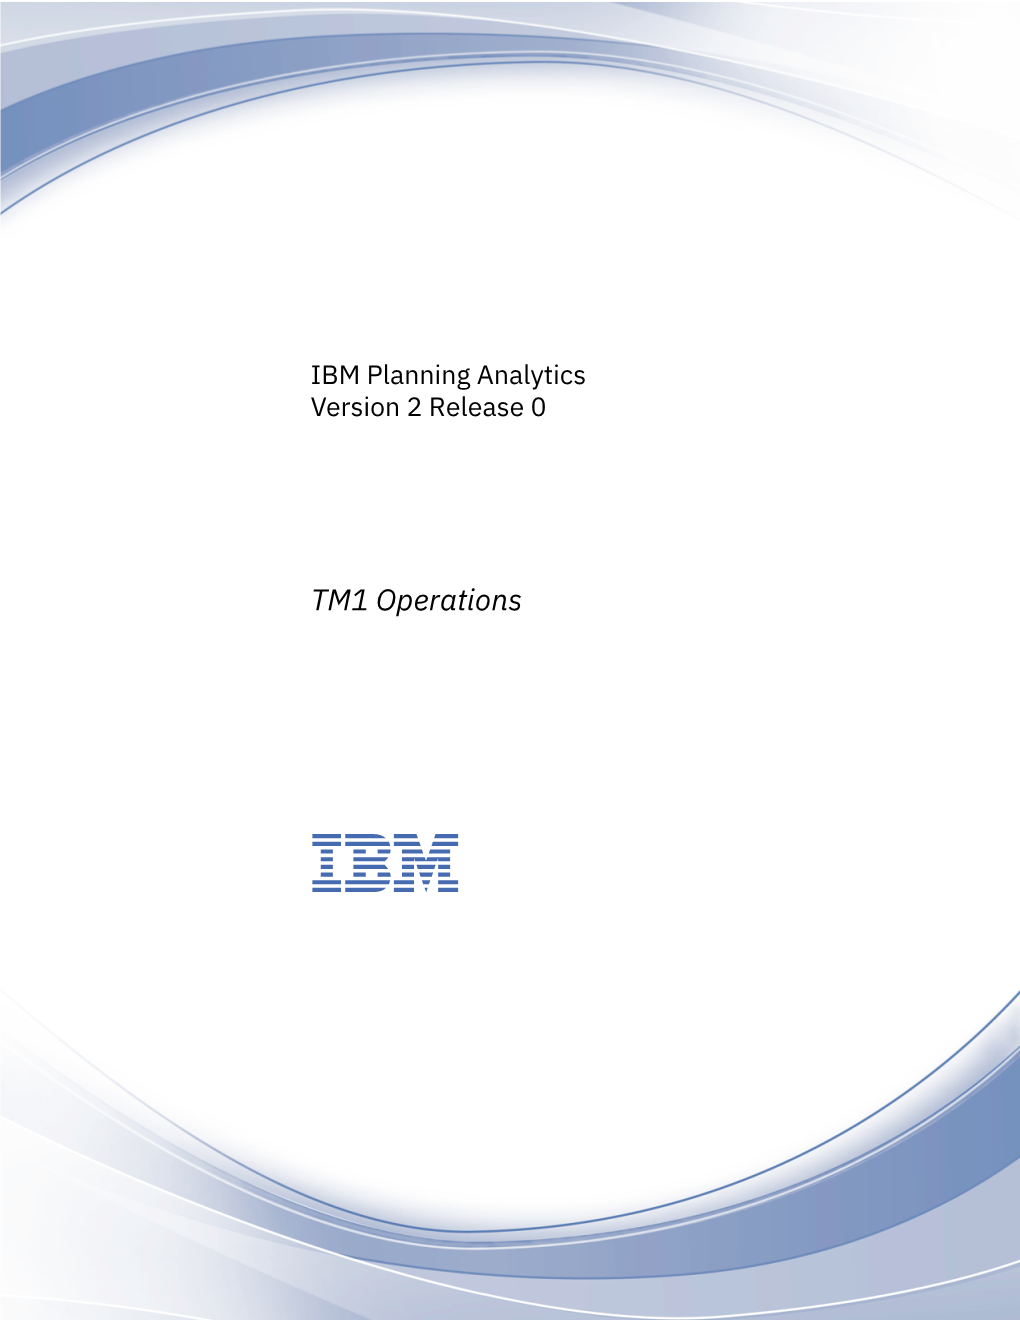 IBM Planning Analytics: TM1 Operations Chapter 1